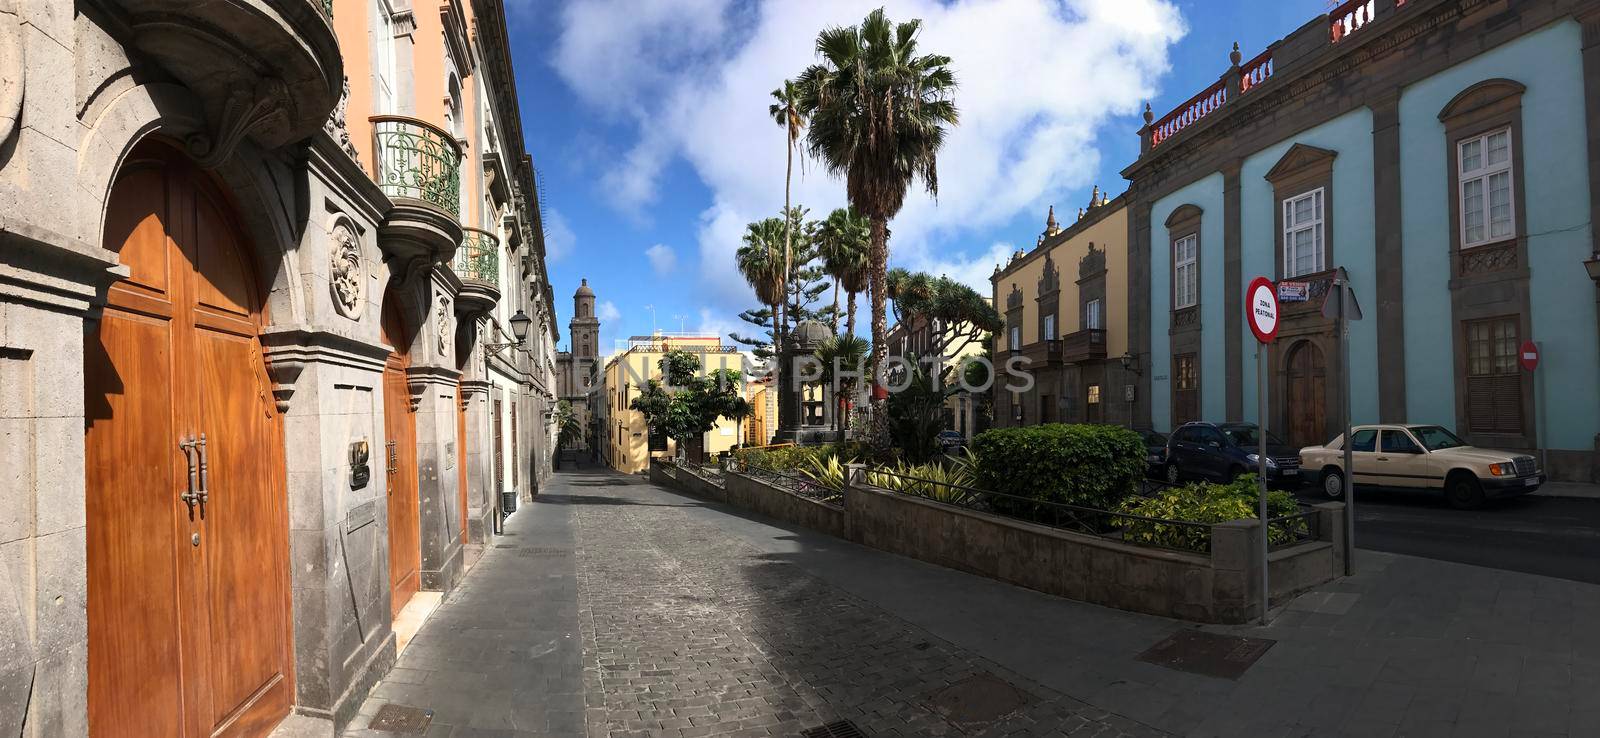 Panorama from Plaza del Espiritu Santo in Las Palmas Gran Canaria Canary Islands Spain